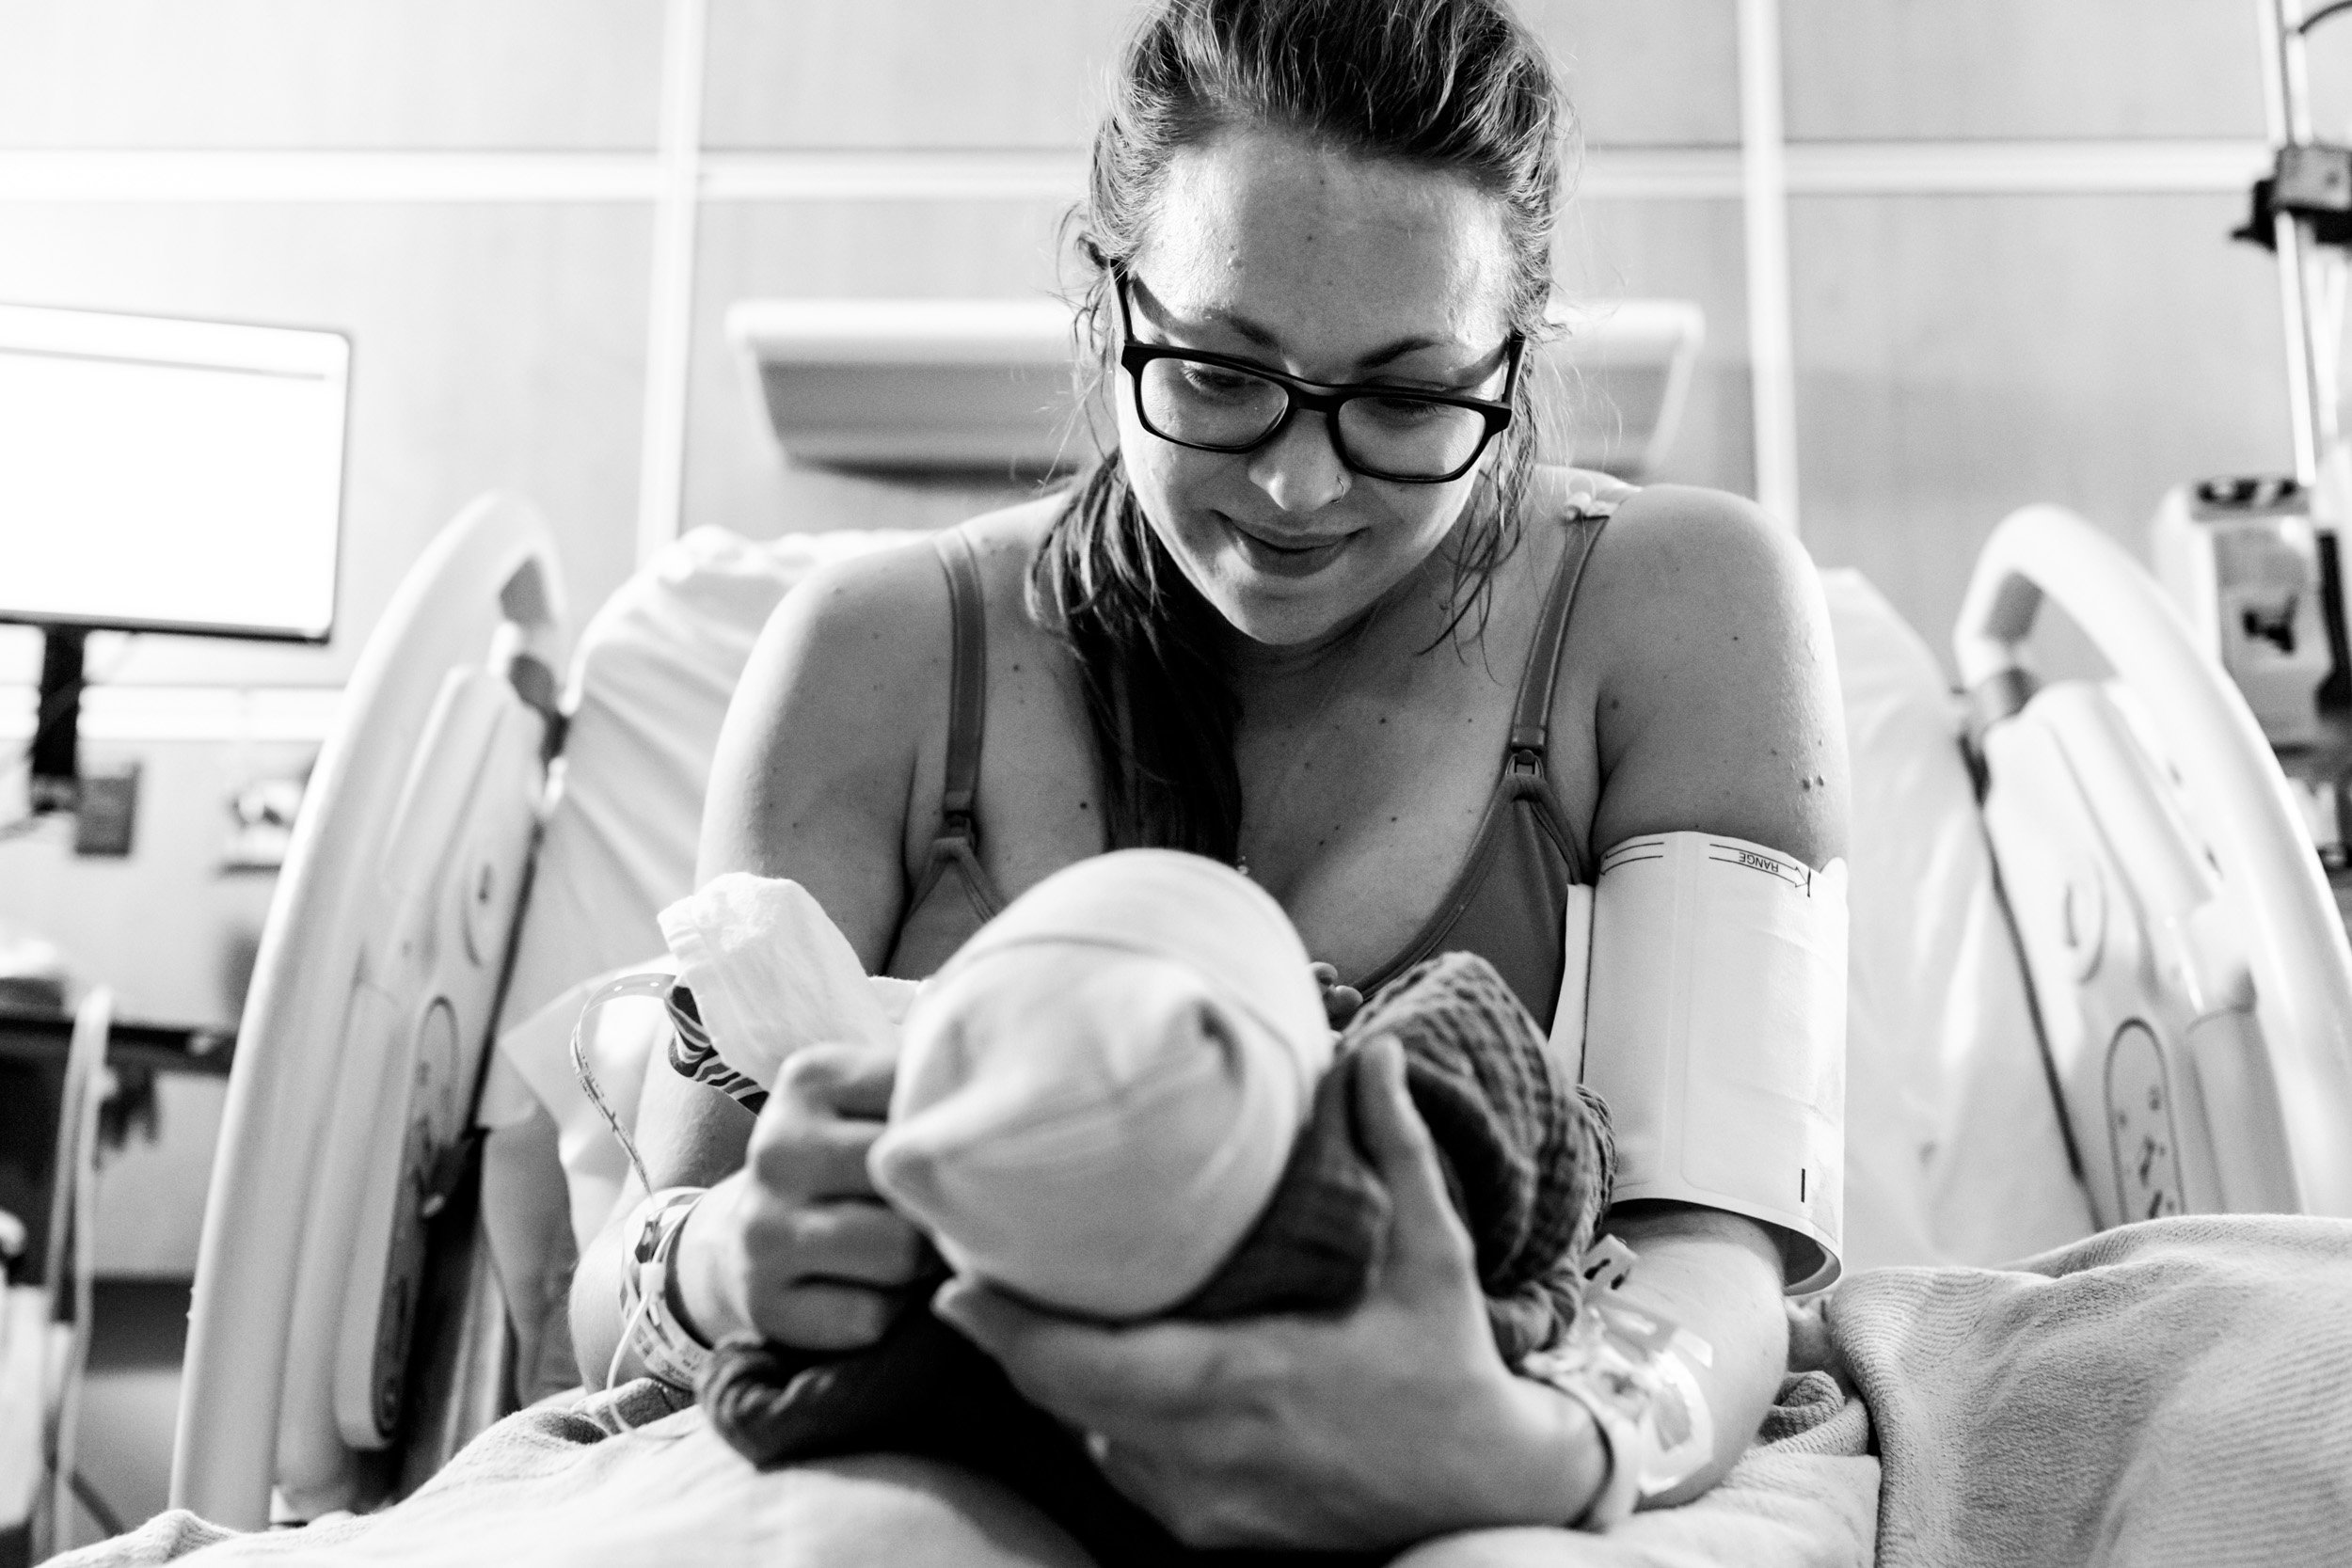 jacksonville mom smiling at her newborn daughter